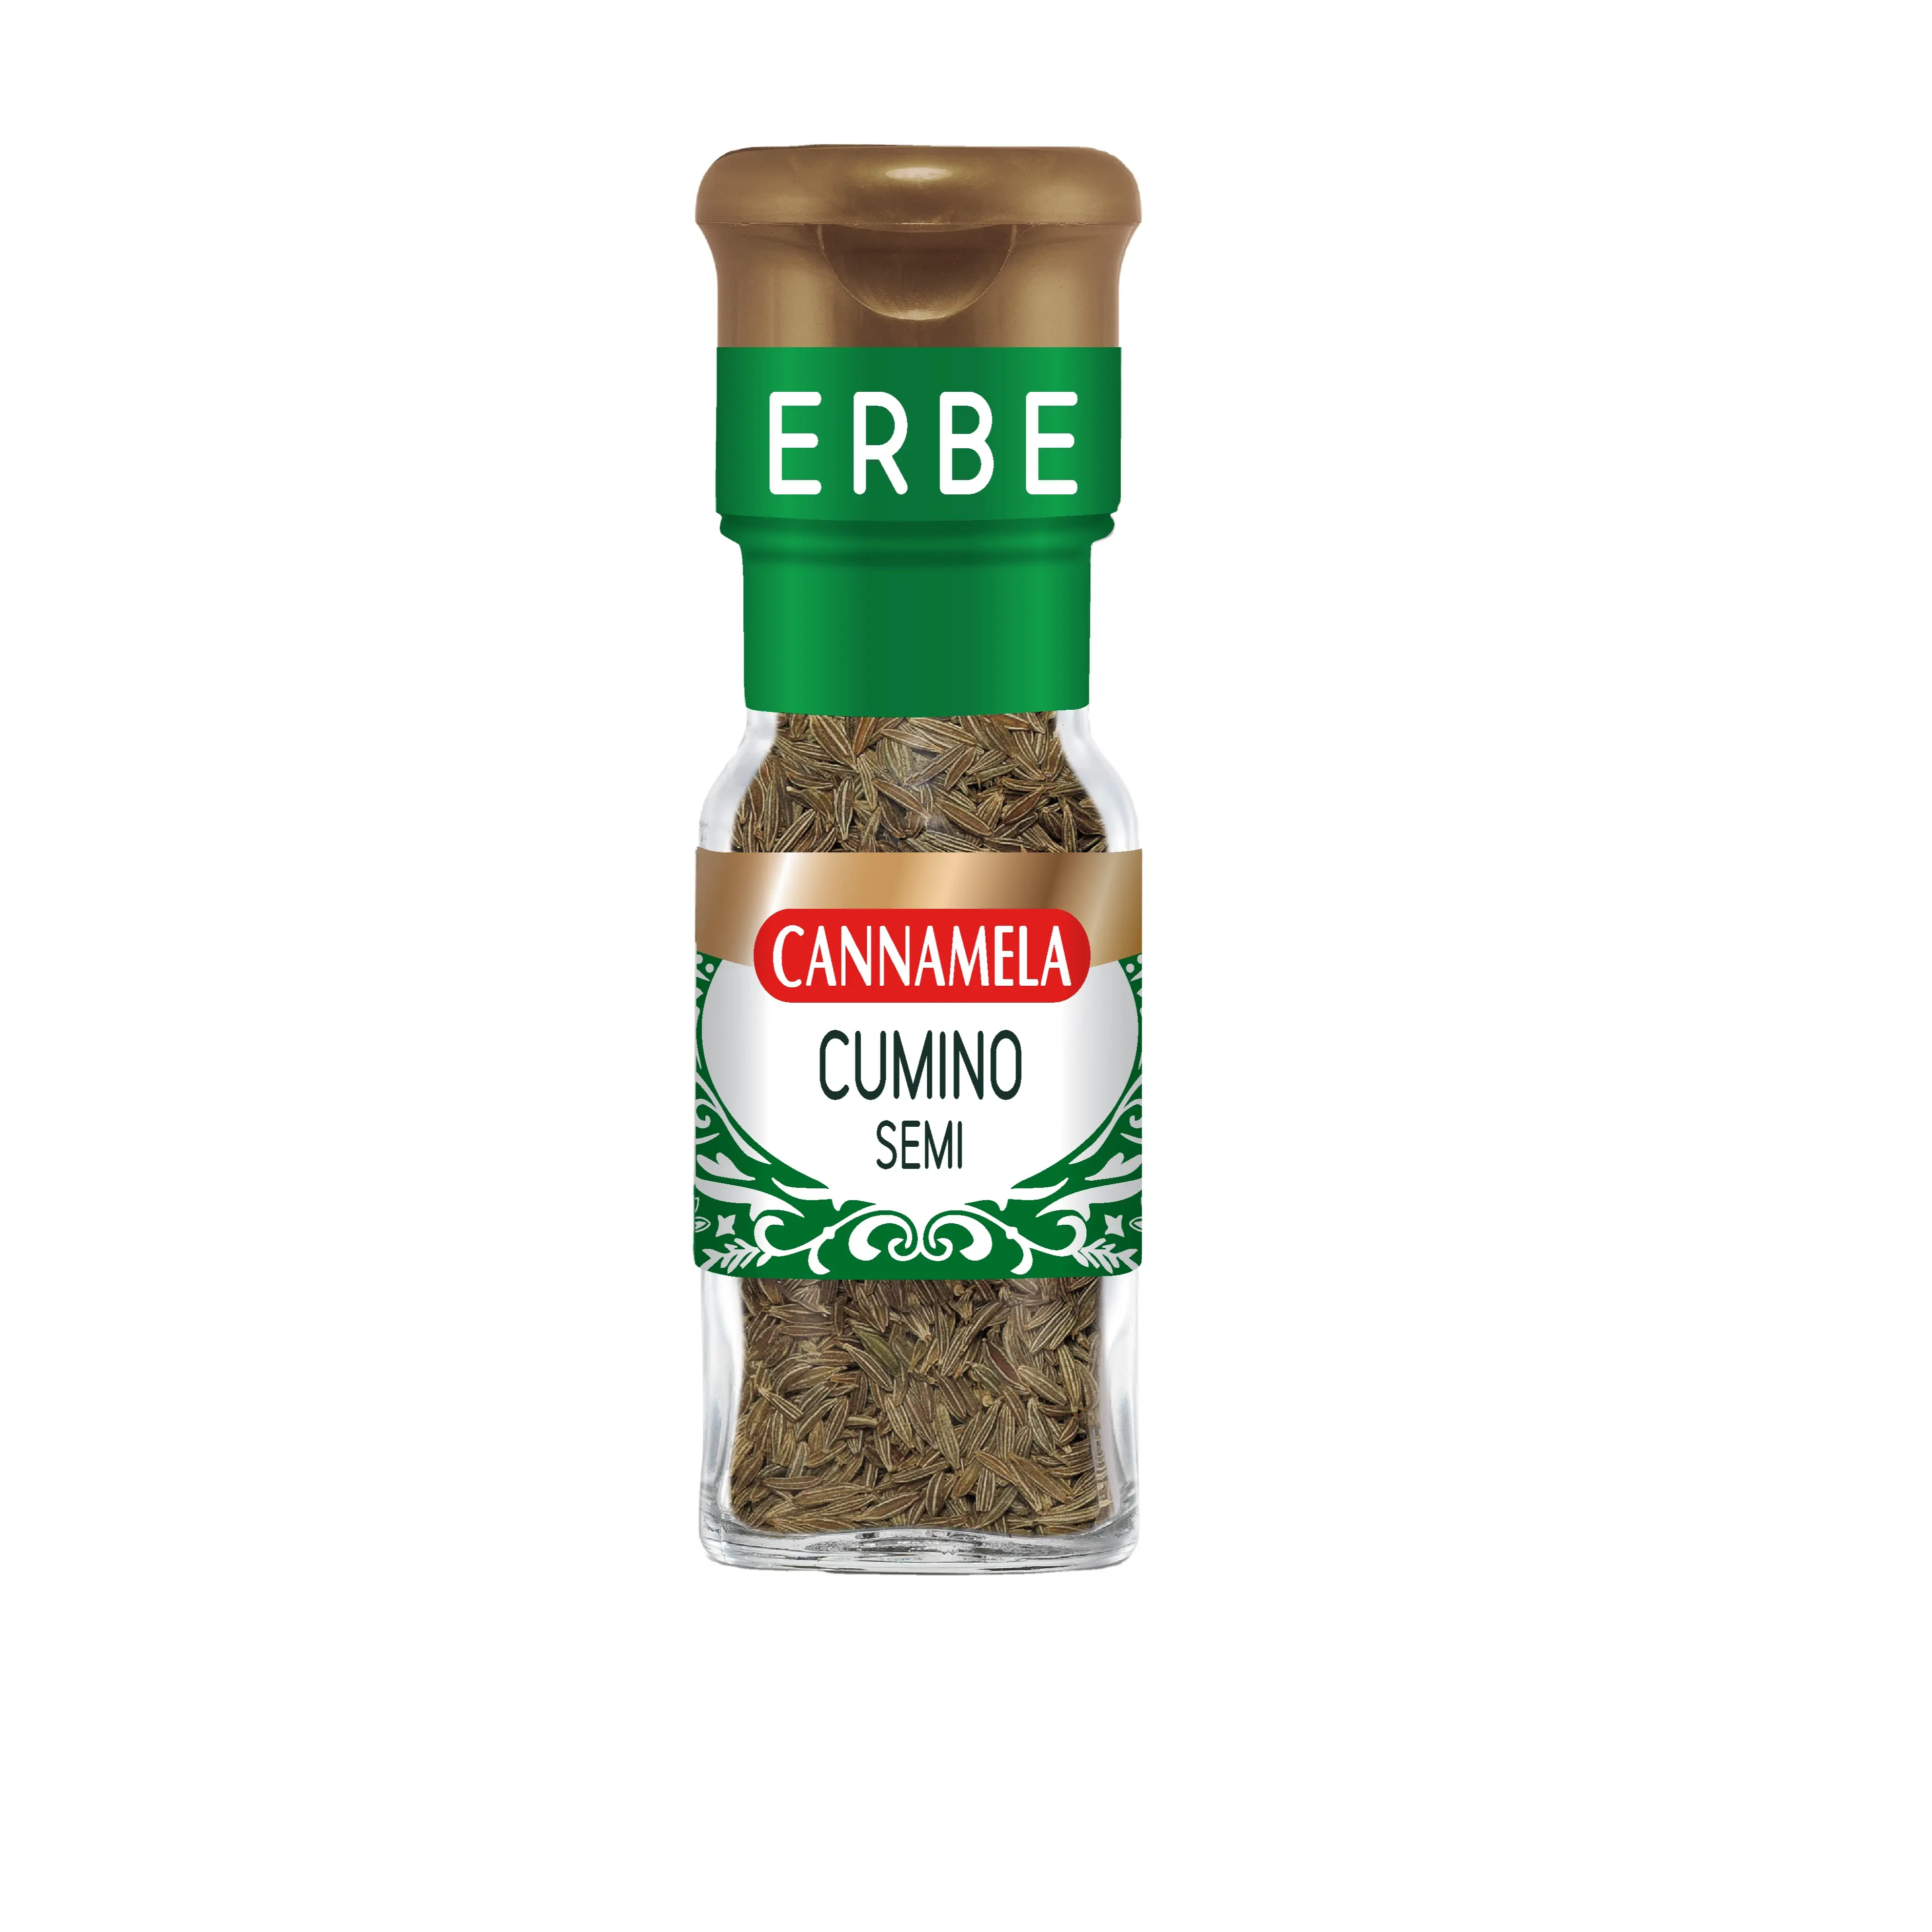 Premium Top Quality Made in Italy Cumin Cumin seeds Cannamela Aromatic Herbs For Seasoning 1 Jar 20g